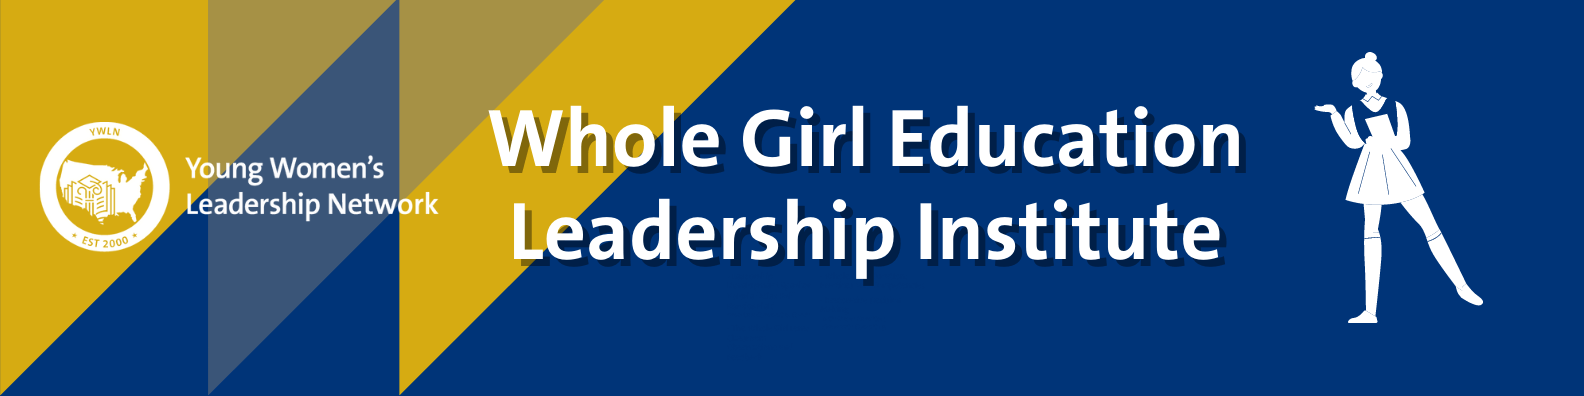 YWLN Whole Girl Education Leadership Institute